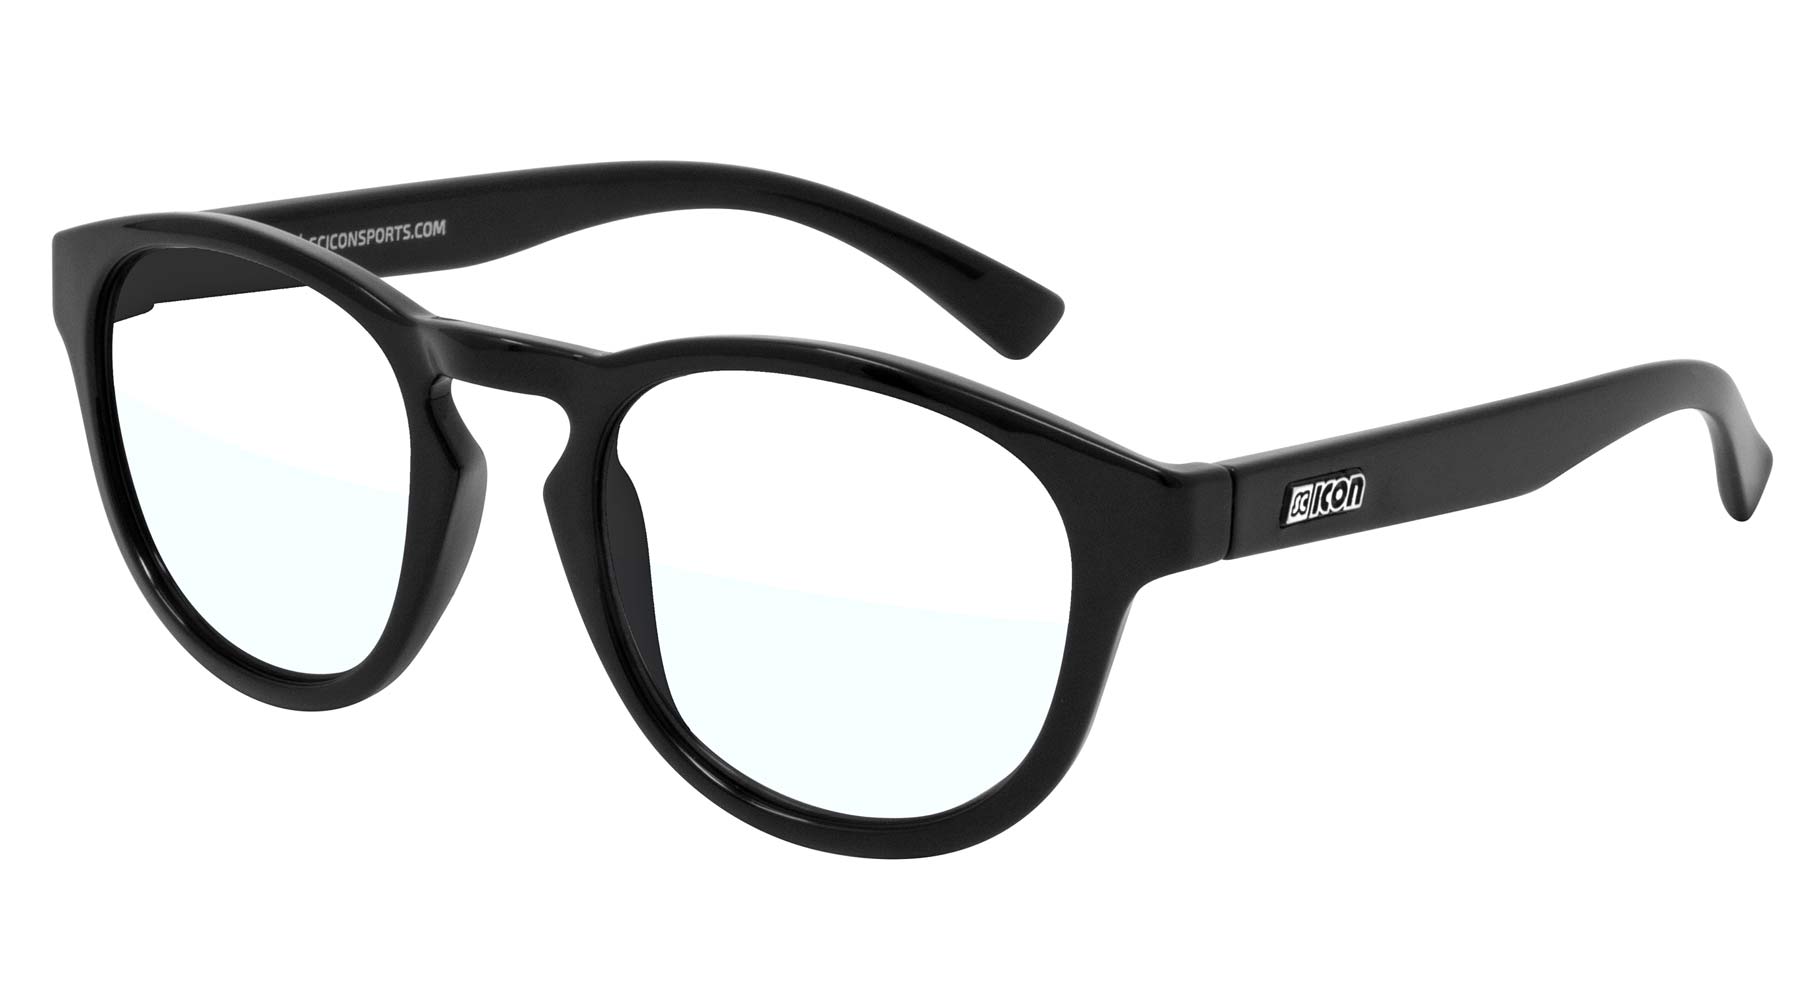 Sciocon-Blue-Zero-glasses-off-the-bike_reduce-screen-time-fatigue_Protom-black-angled.jpg